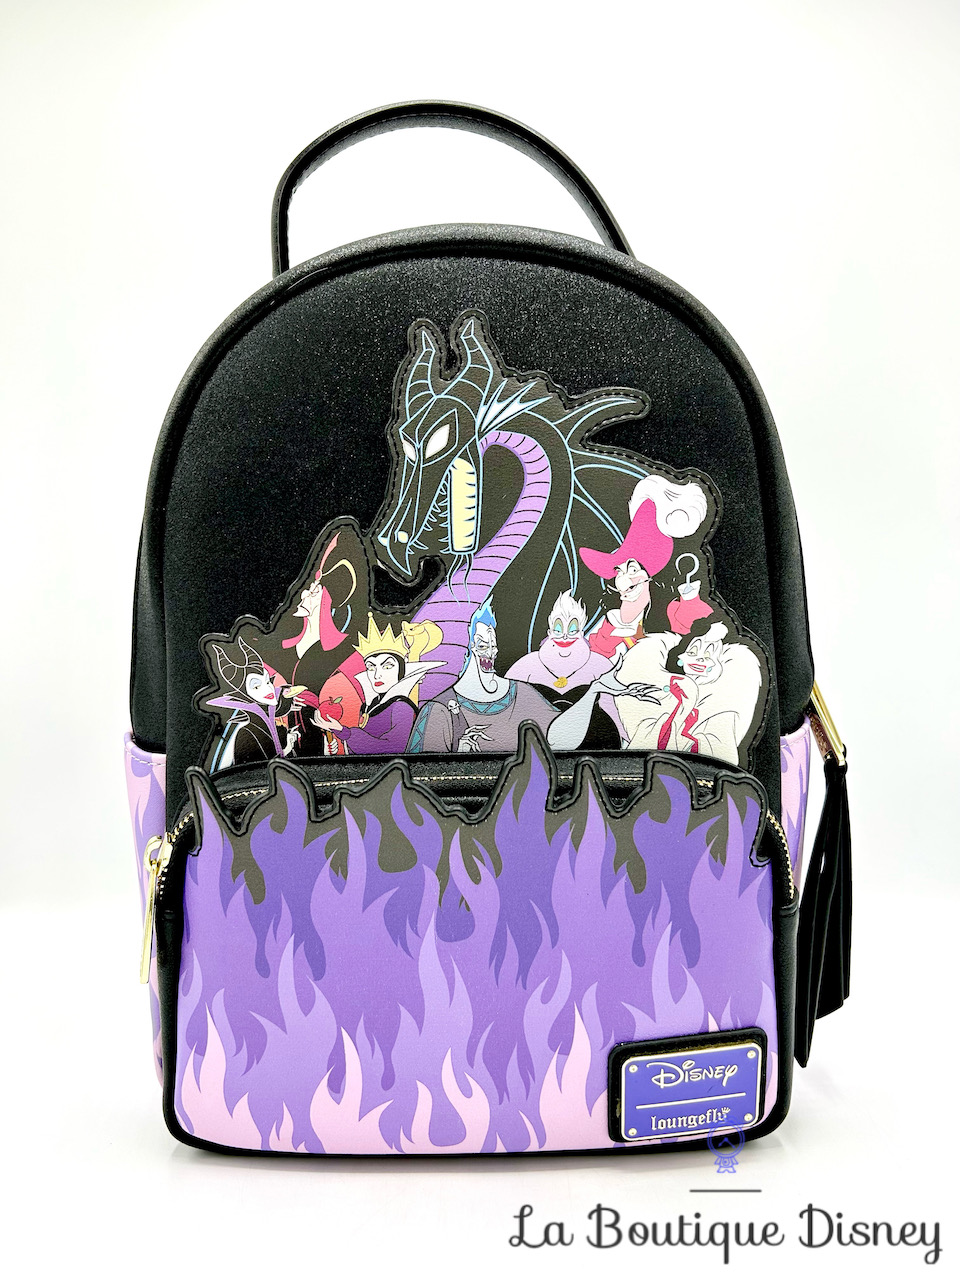 Sac à dos Loungefly Villains Purple Flame Disney Backpack noir violet méchants flammes